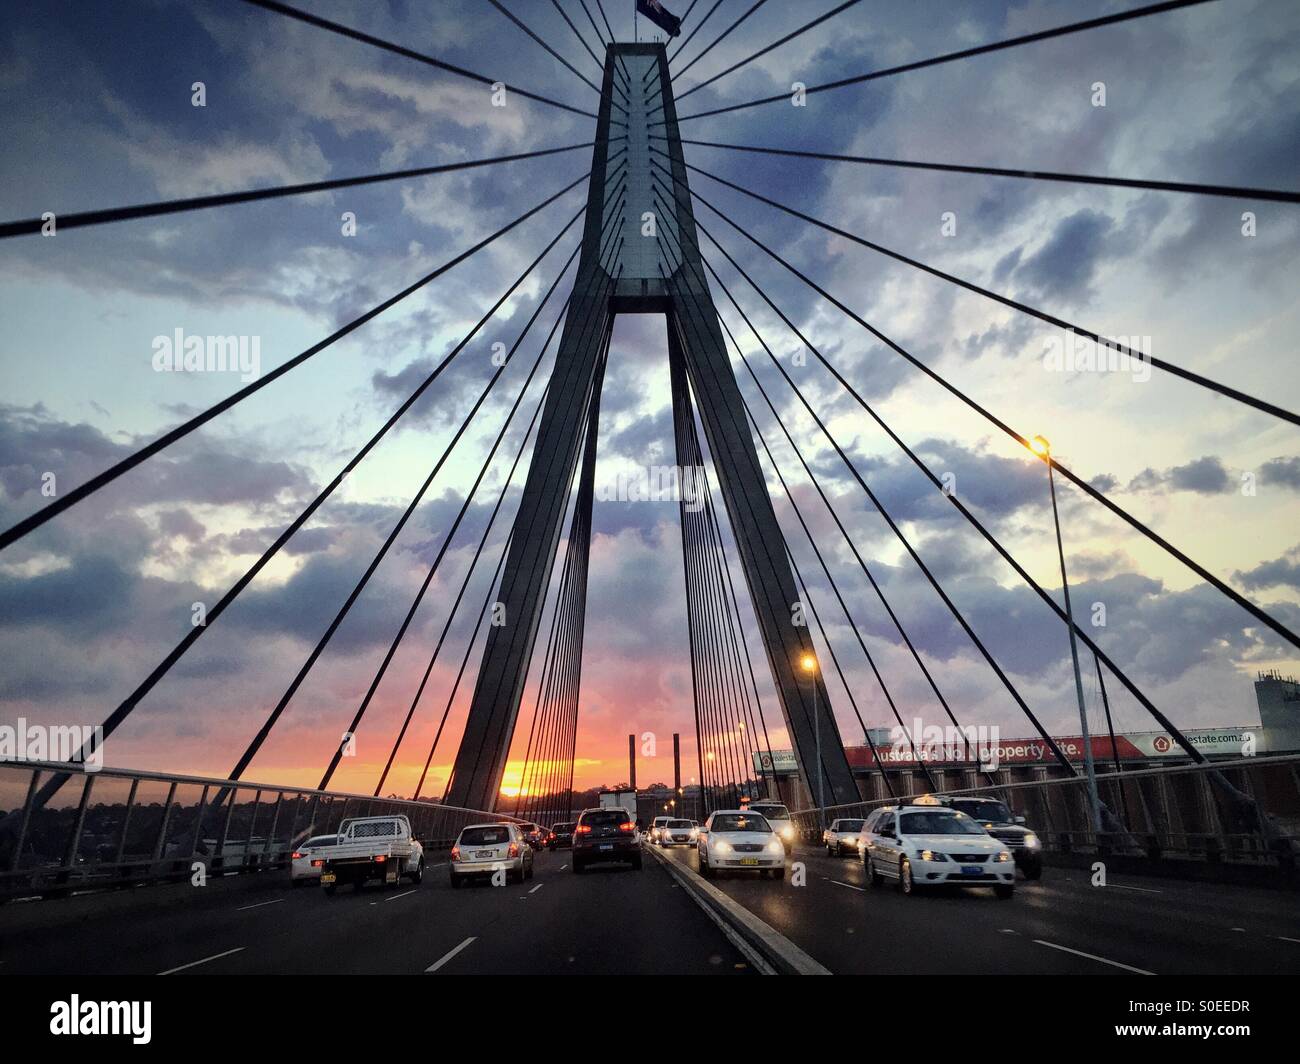 The Anzac bridge in Sydney at dusk Stock Photo